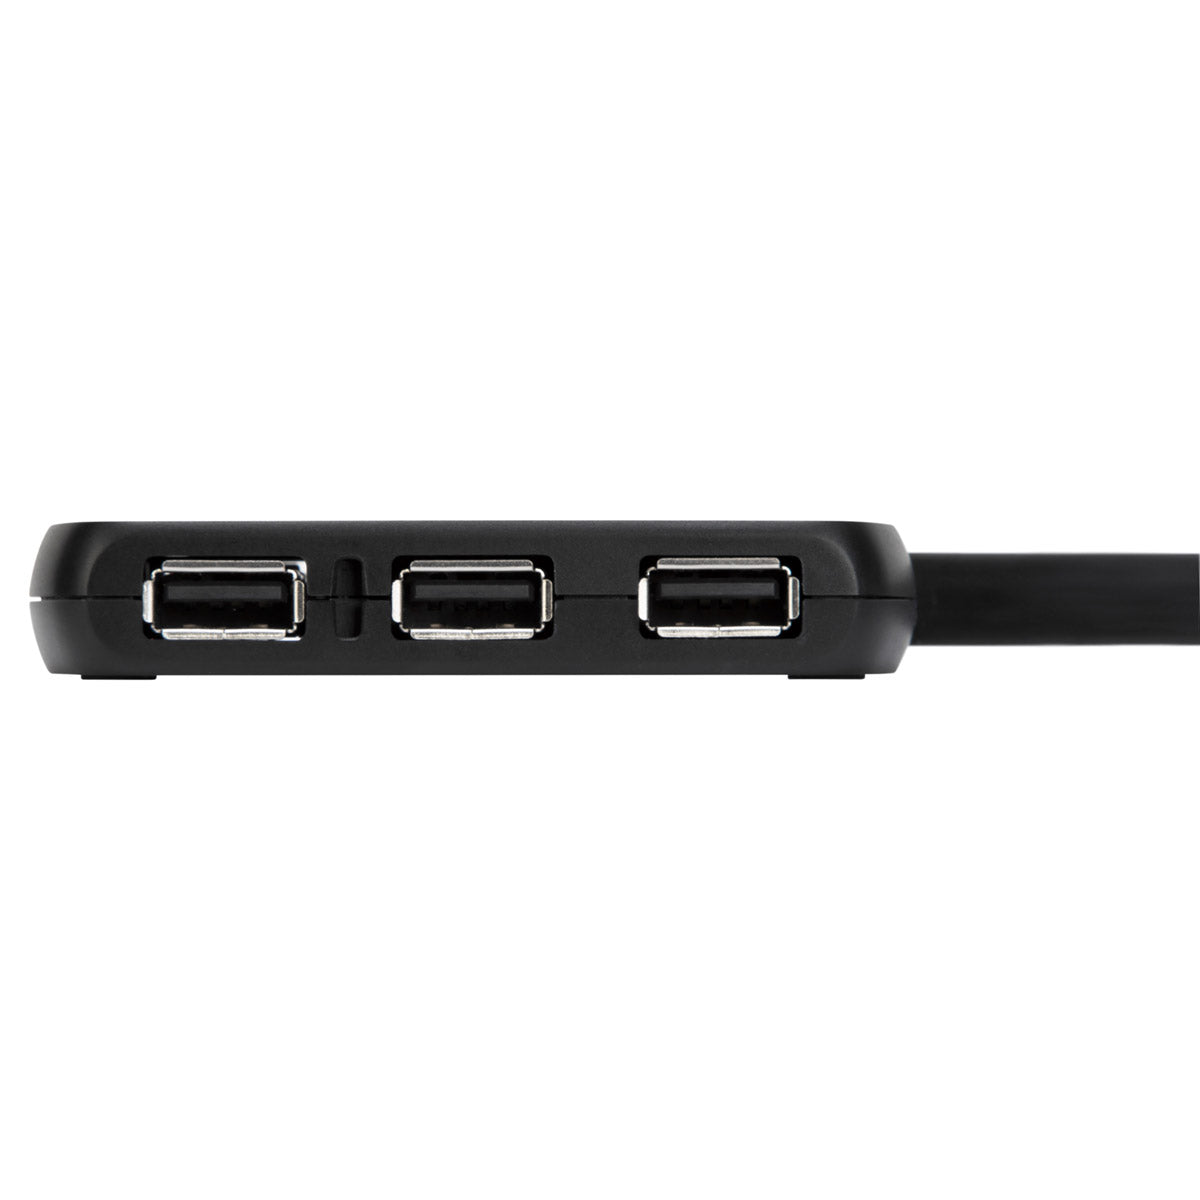 Targus ACH214 USB 2.0 4-Port Hub 集線器